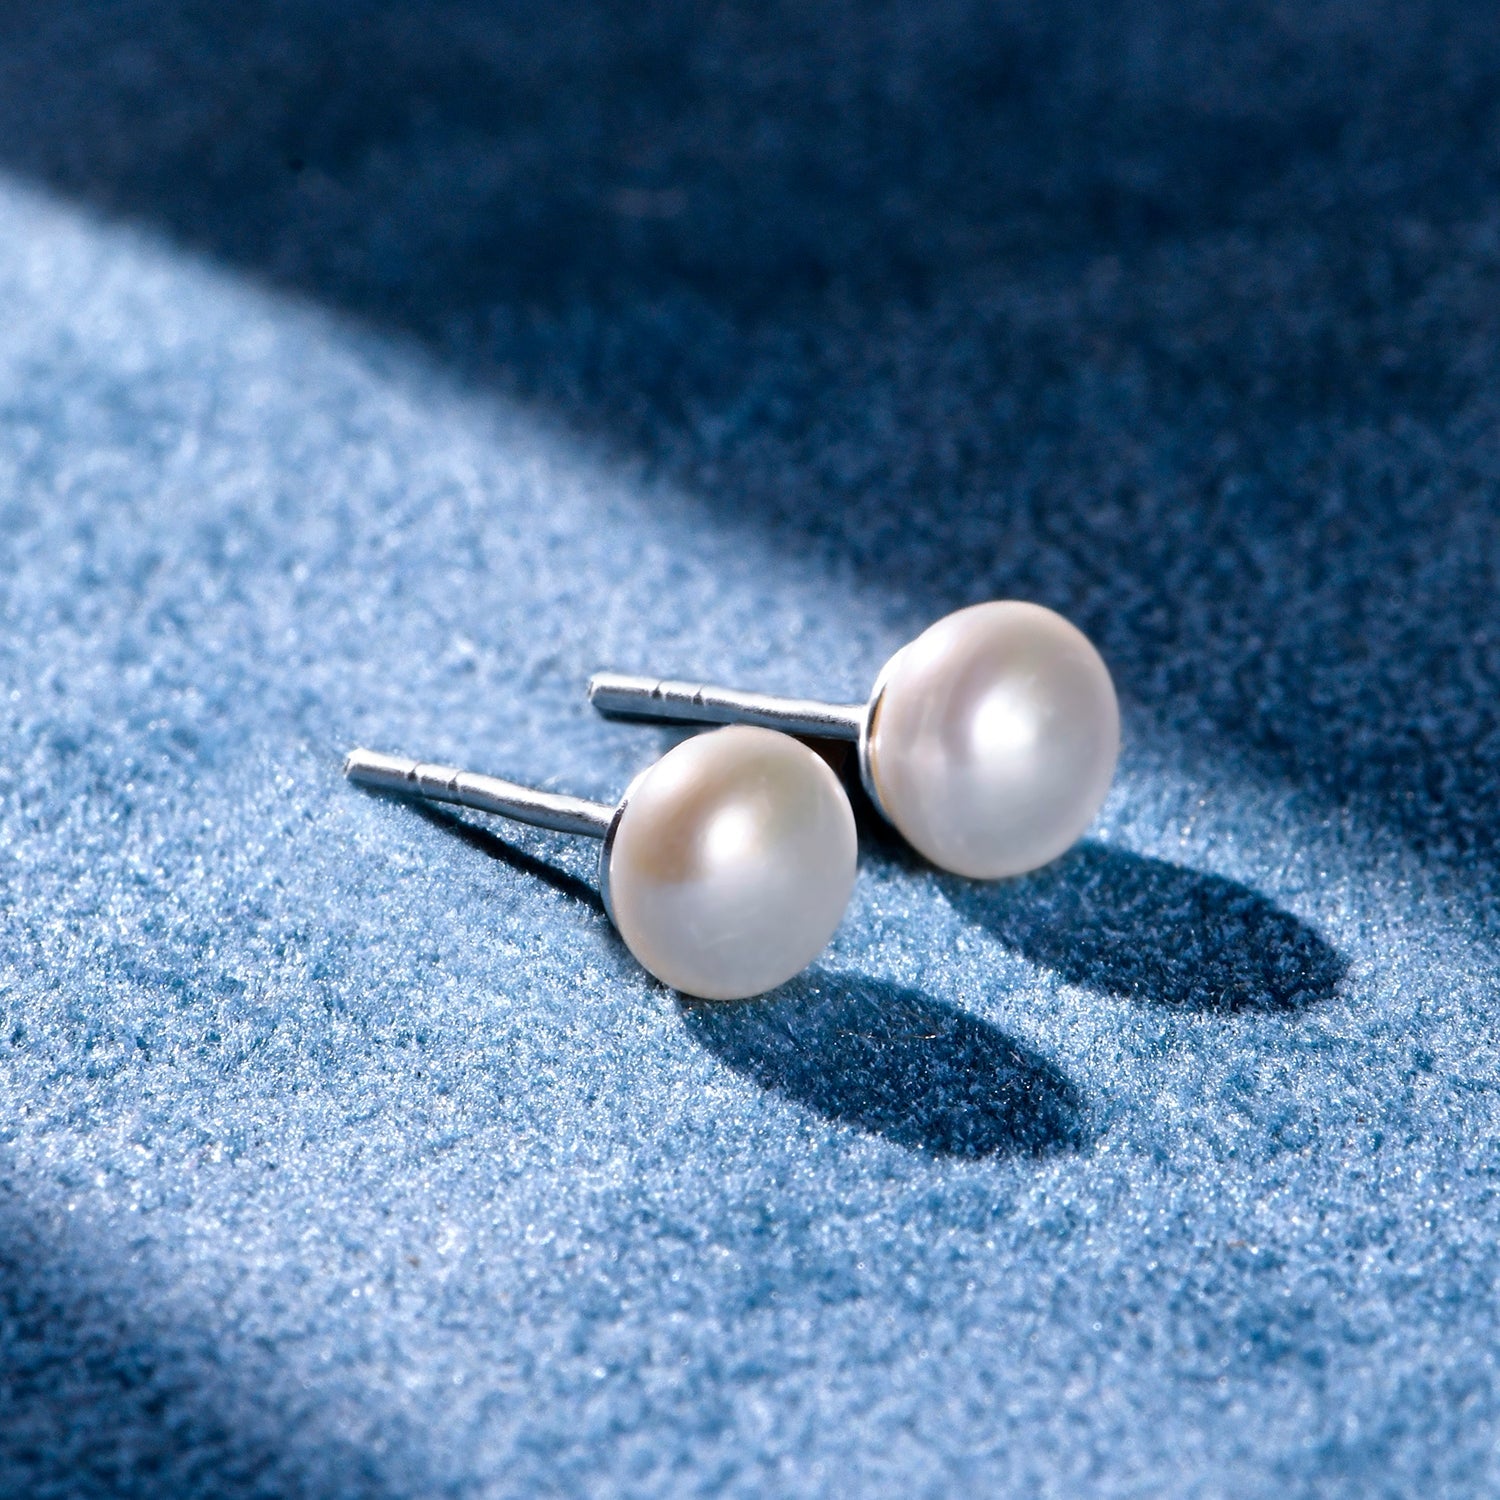 Marble Crystal Drop Earrings - Green, Buy Earrings Online Cheap, Shop From  The Latest Collection Of Earrings For Women & Girls Online. Buy Studs, Ear  Cuff, Drop & More Earrings At Best